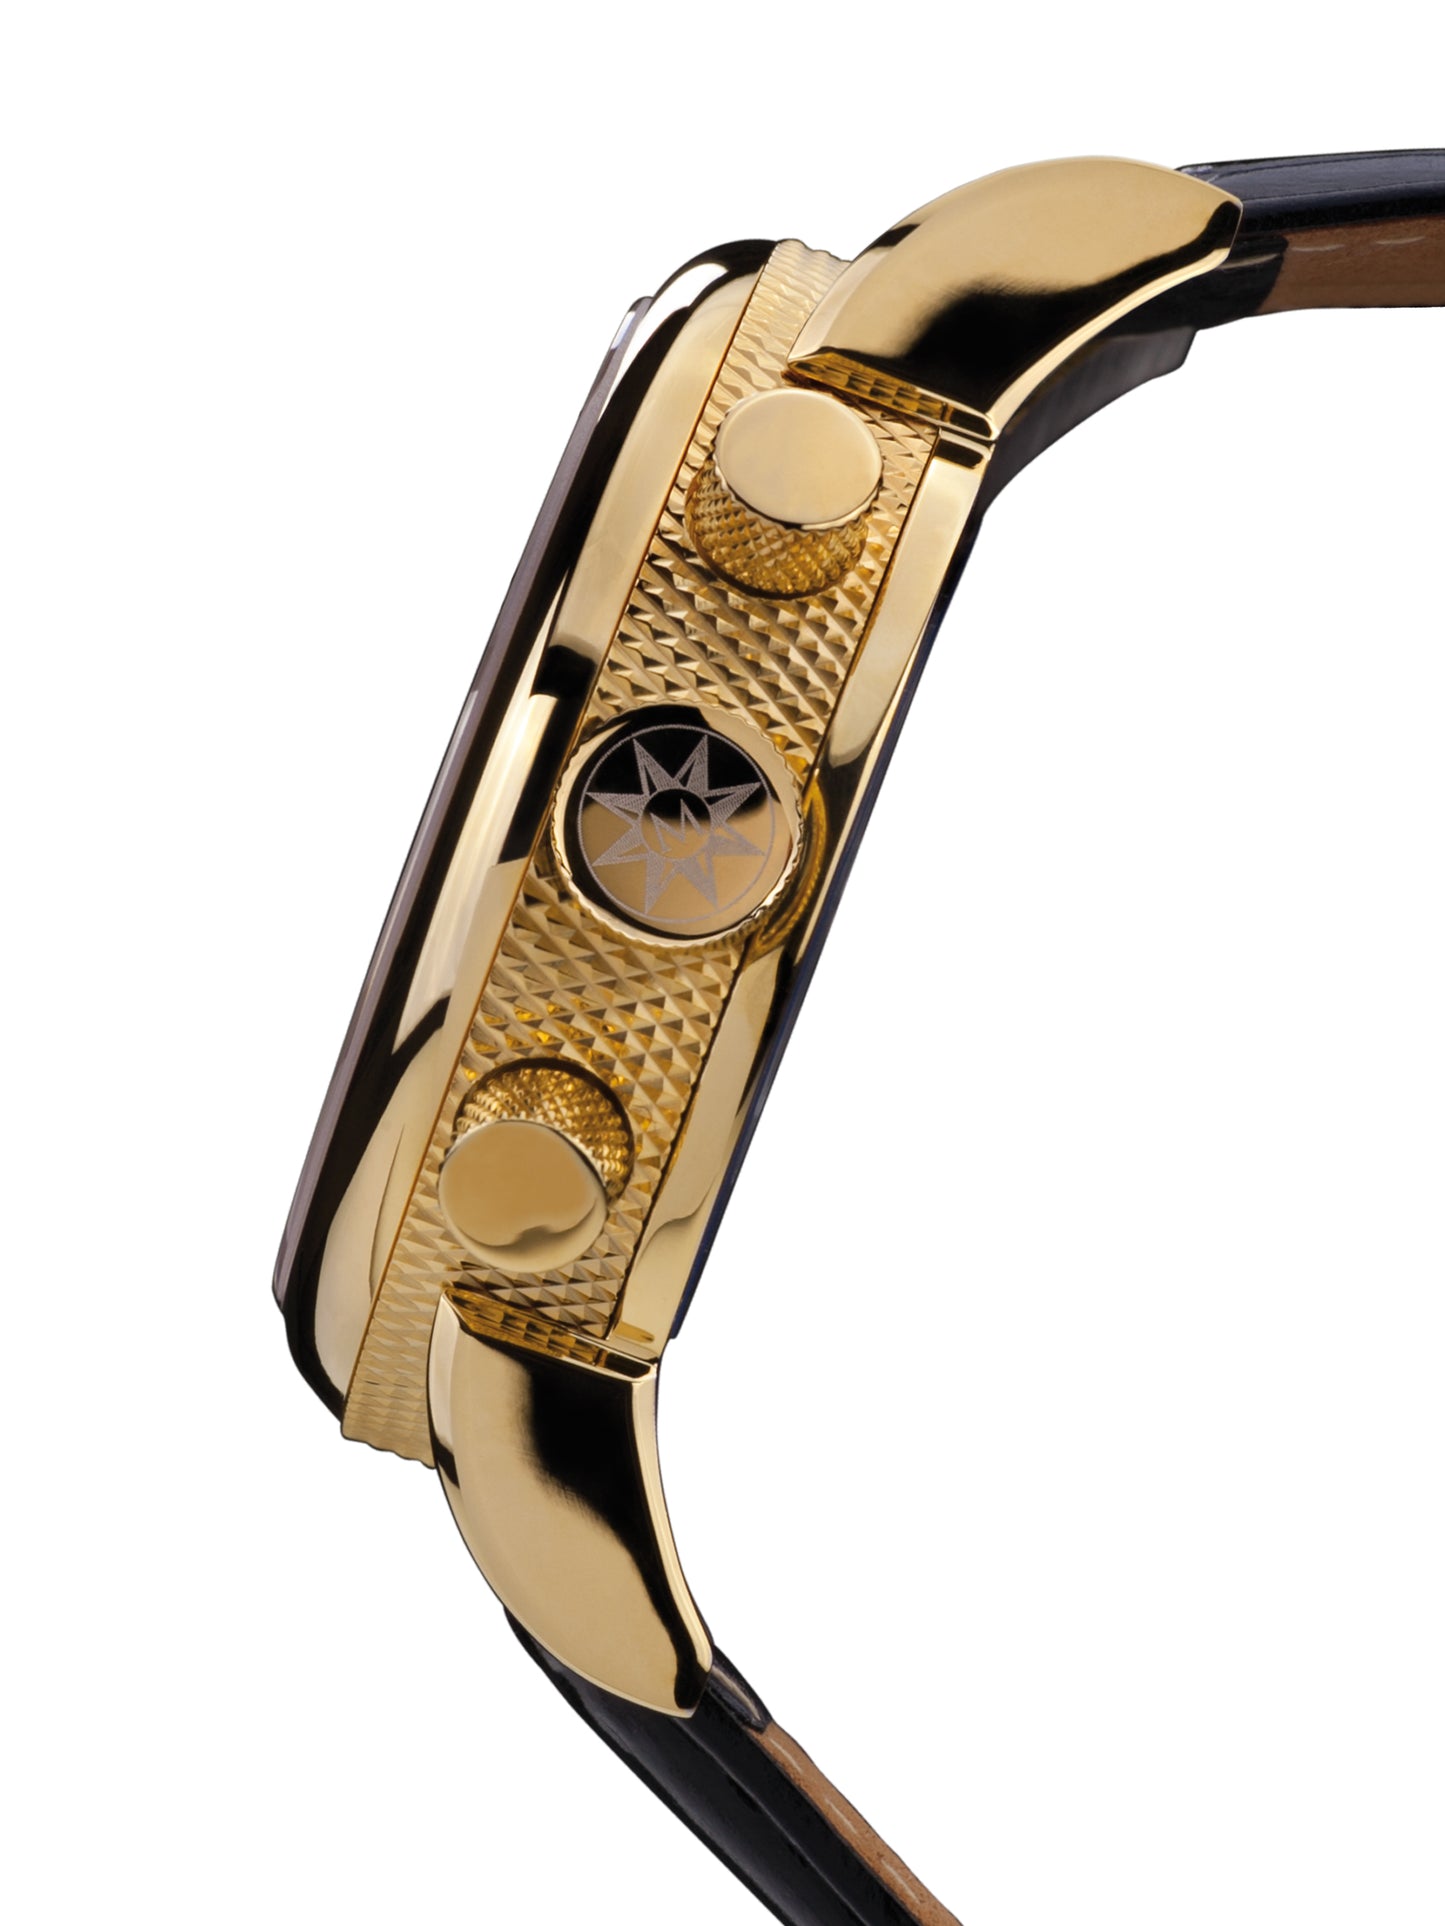 Automatic watches — La Grande — Mathis Montabon — gold schwarz